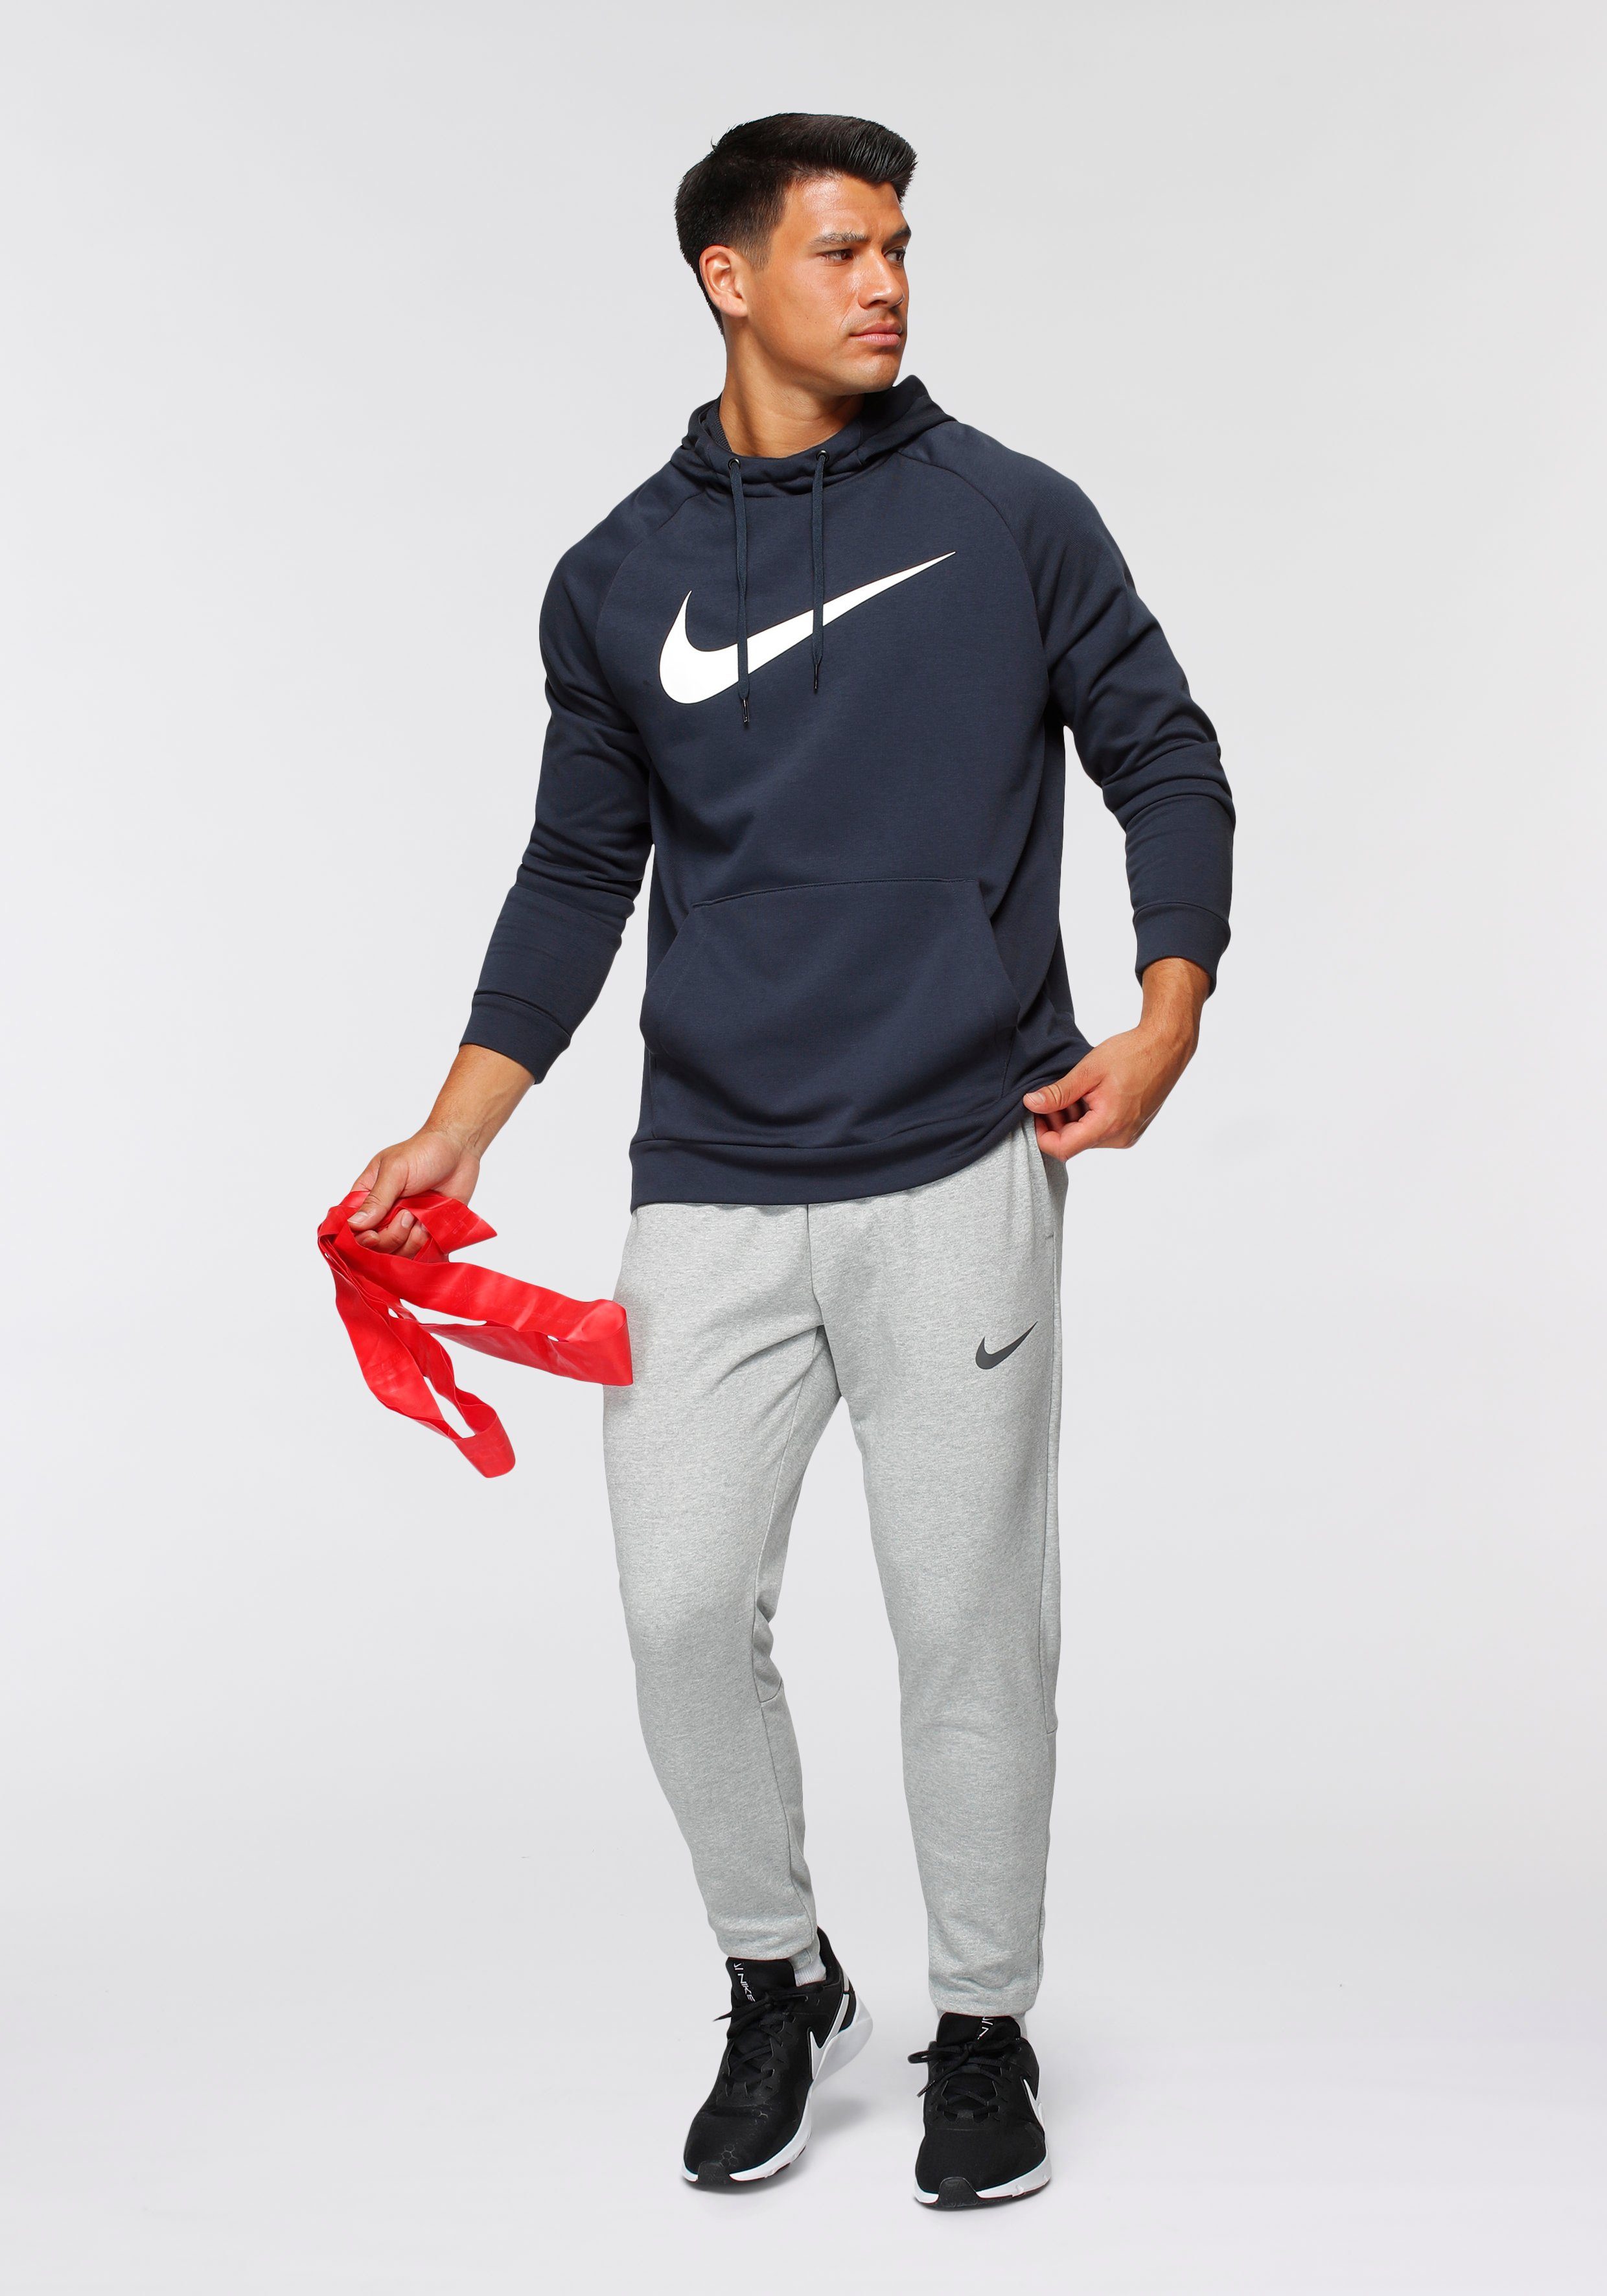 HOODIE TRAINING MEN'S PULLOVER marine Nike DRI-FIT Kapuzensweatshirt